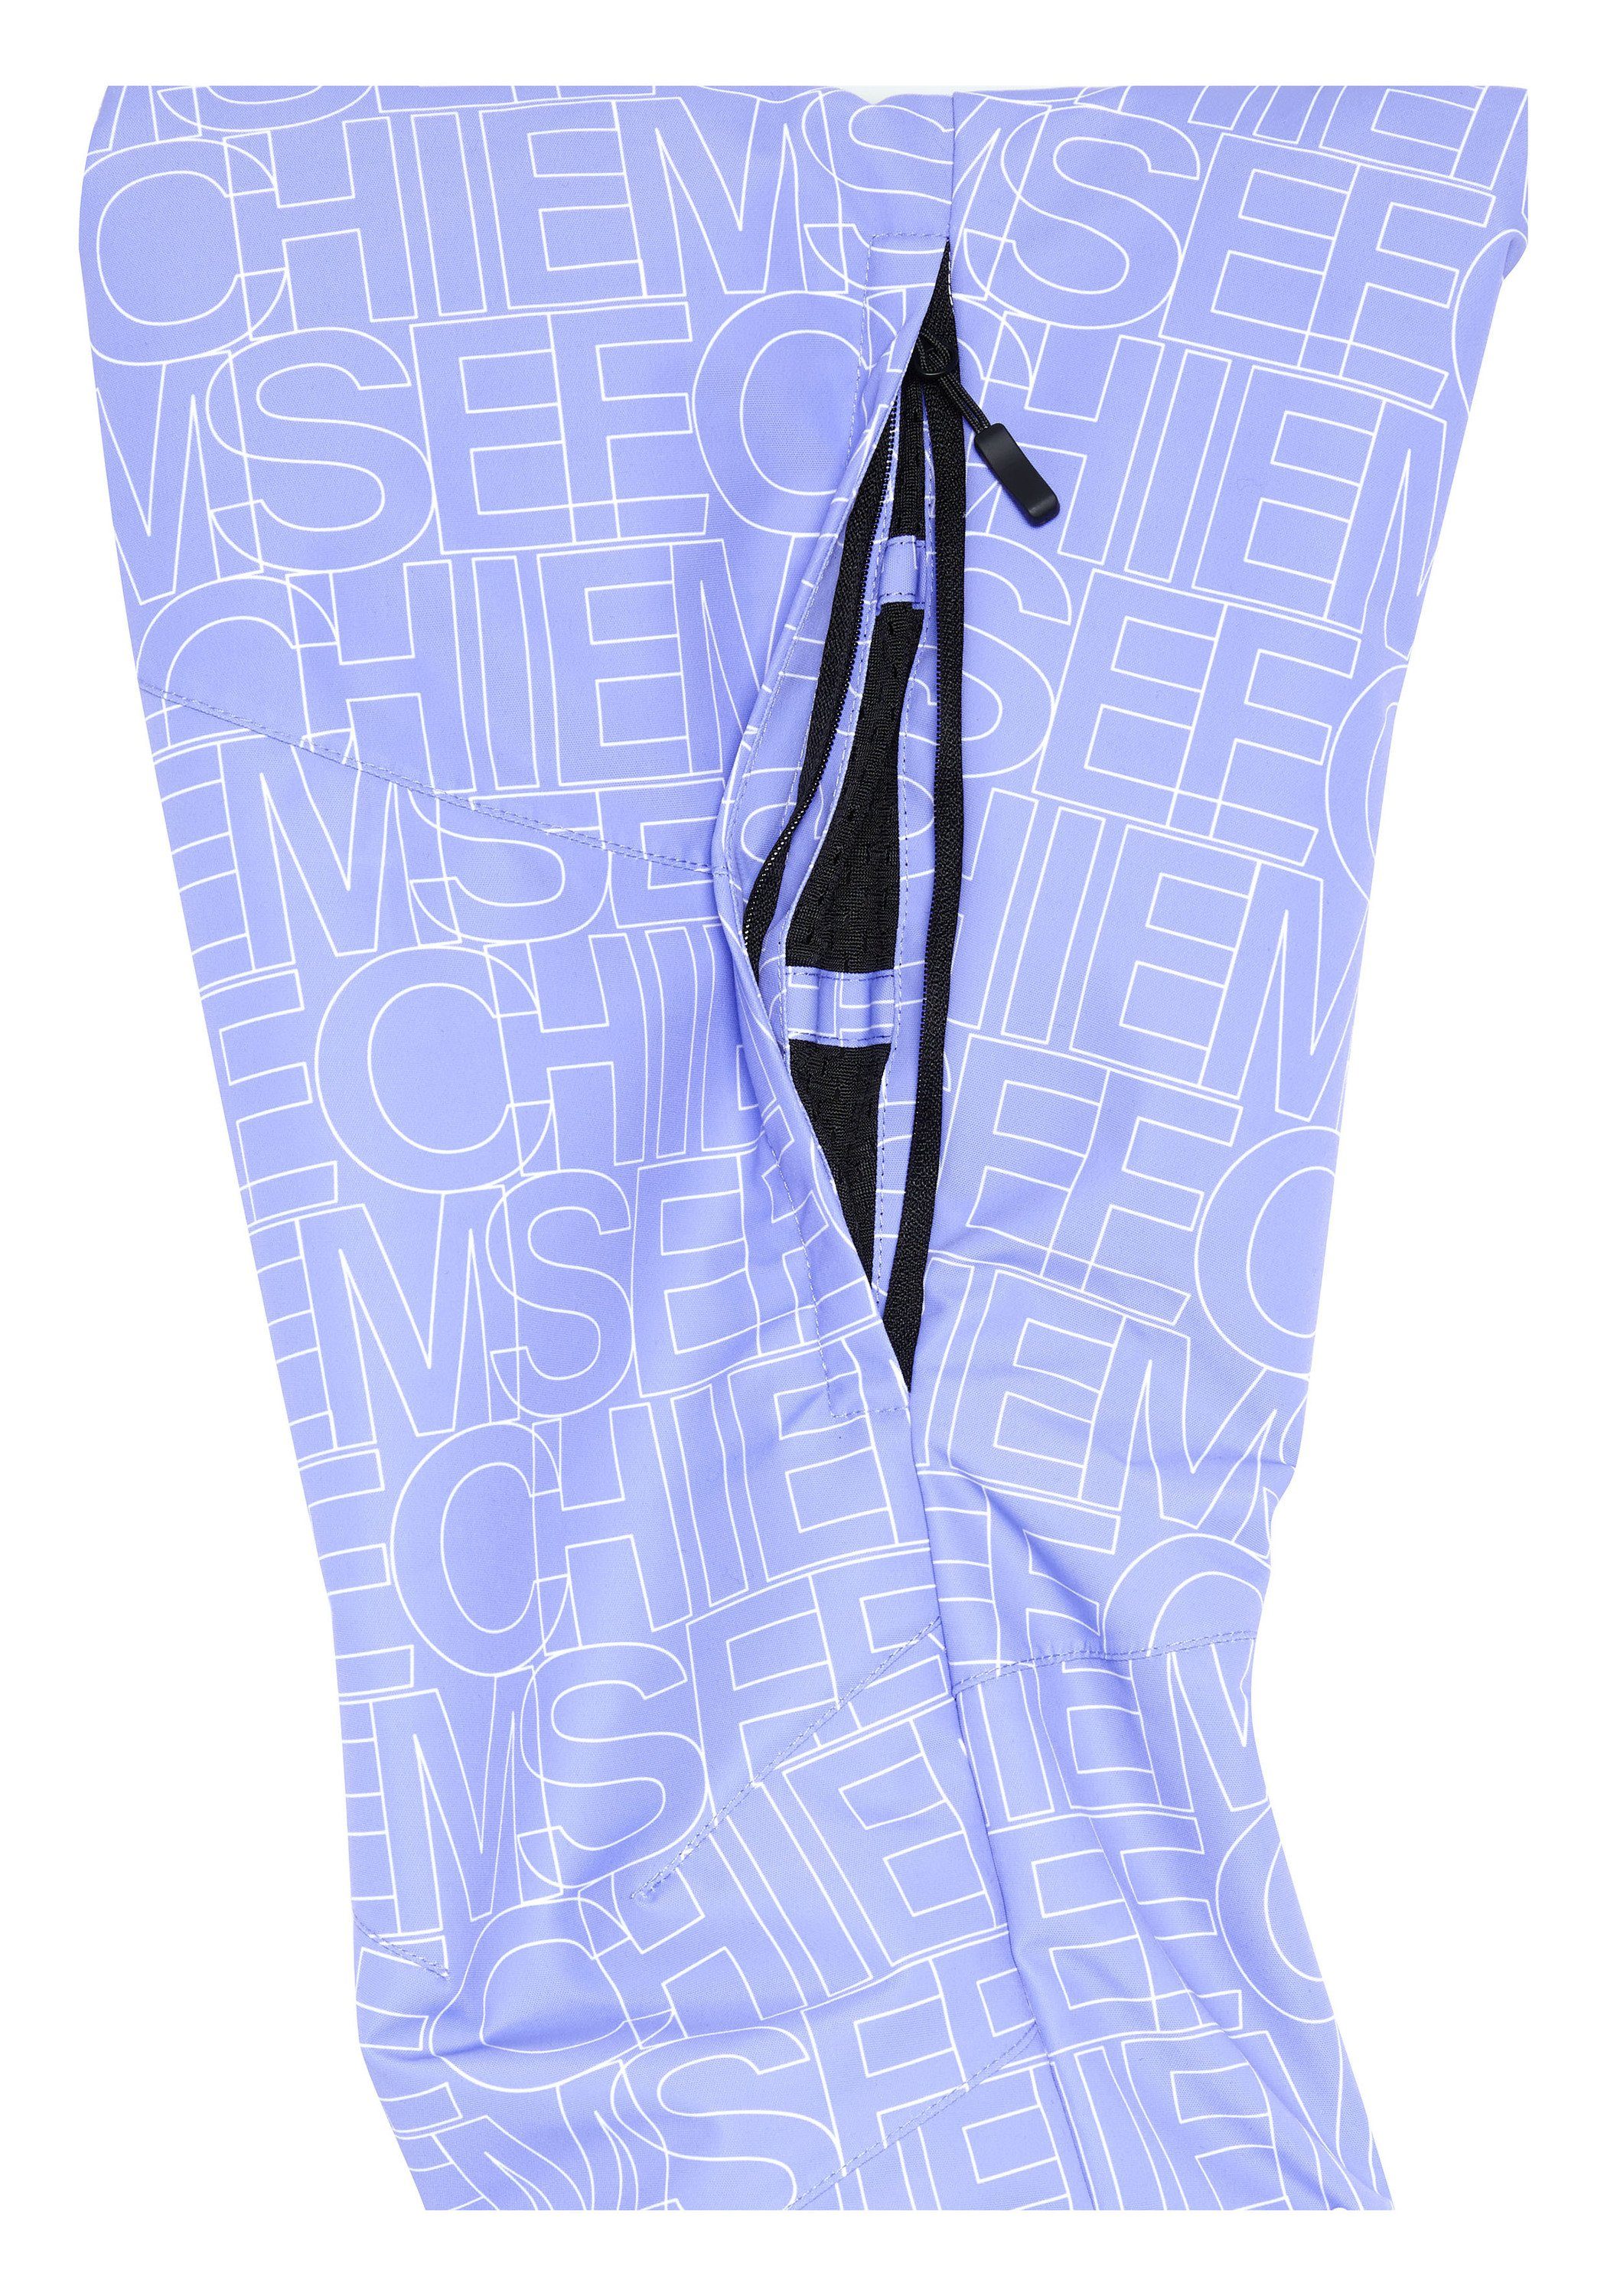 Chiemsee Sporthose Slim-Fit Blue/White Skihose mit Medium Allover-Muster 1